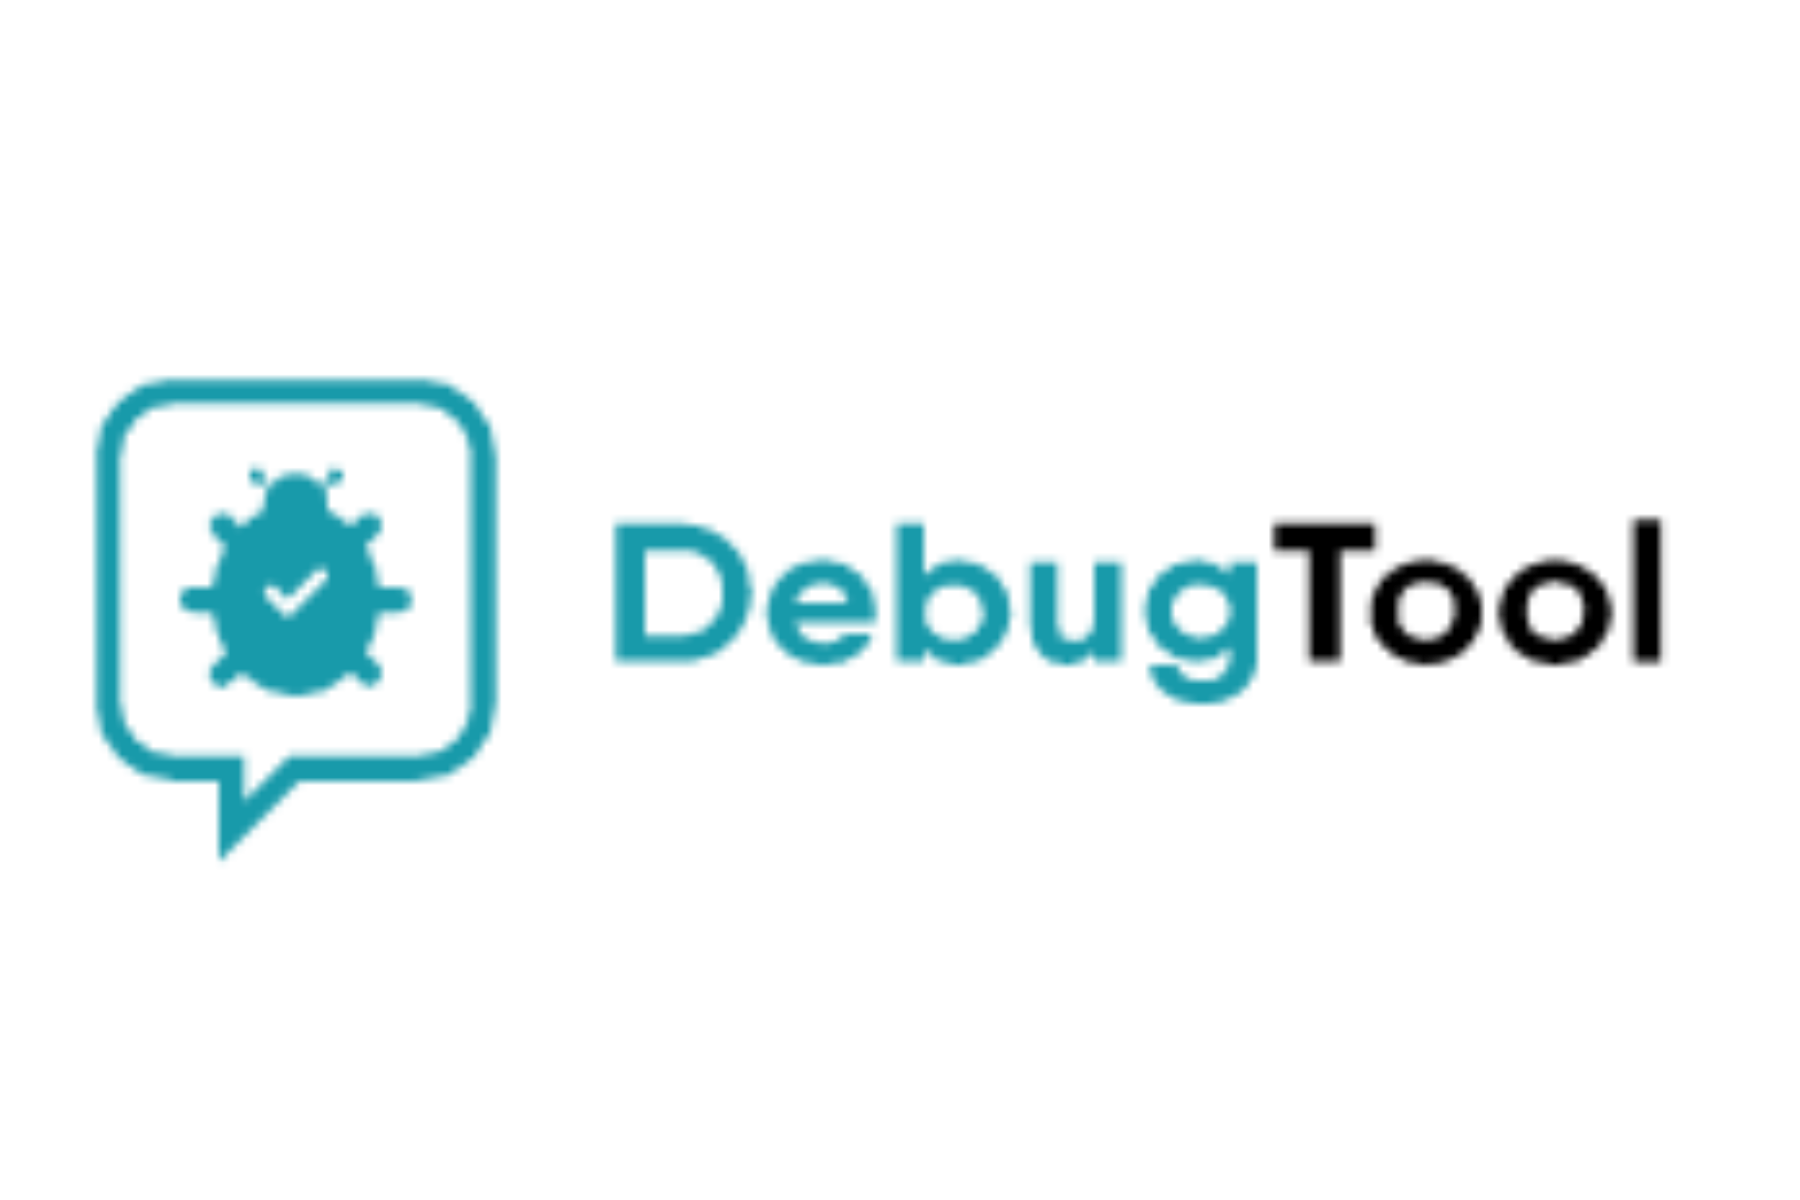 relevant-debugtool-logo.png